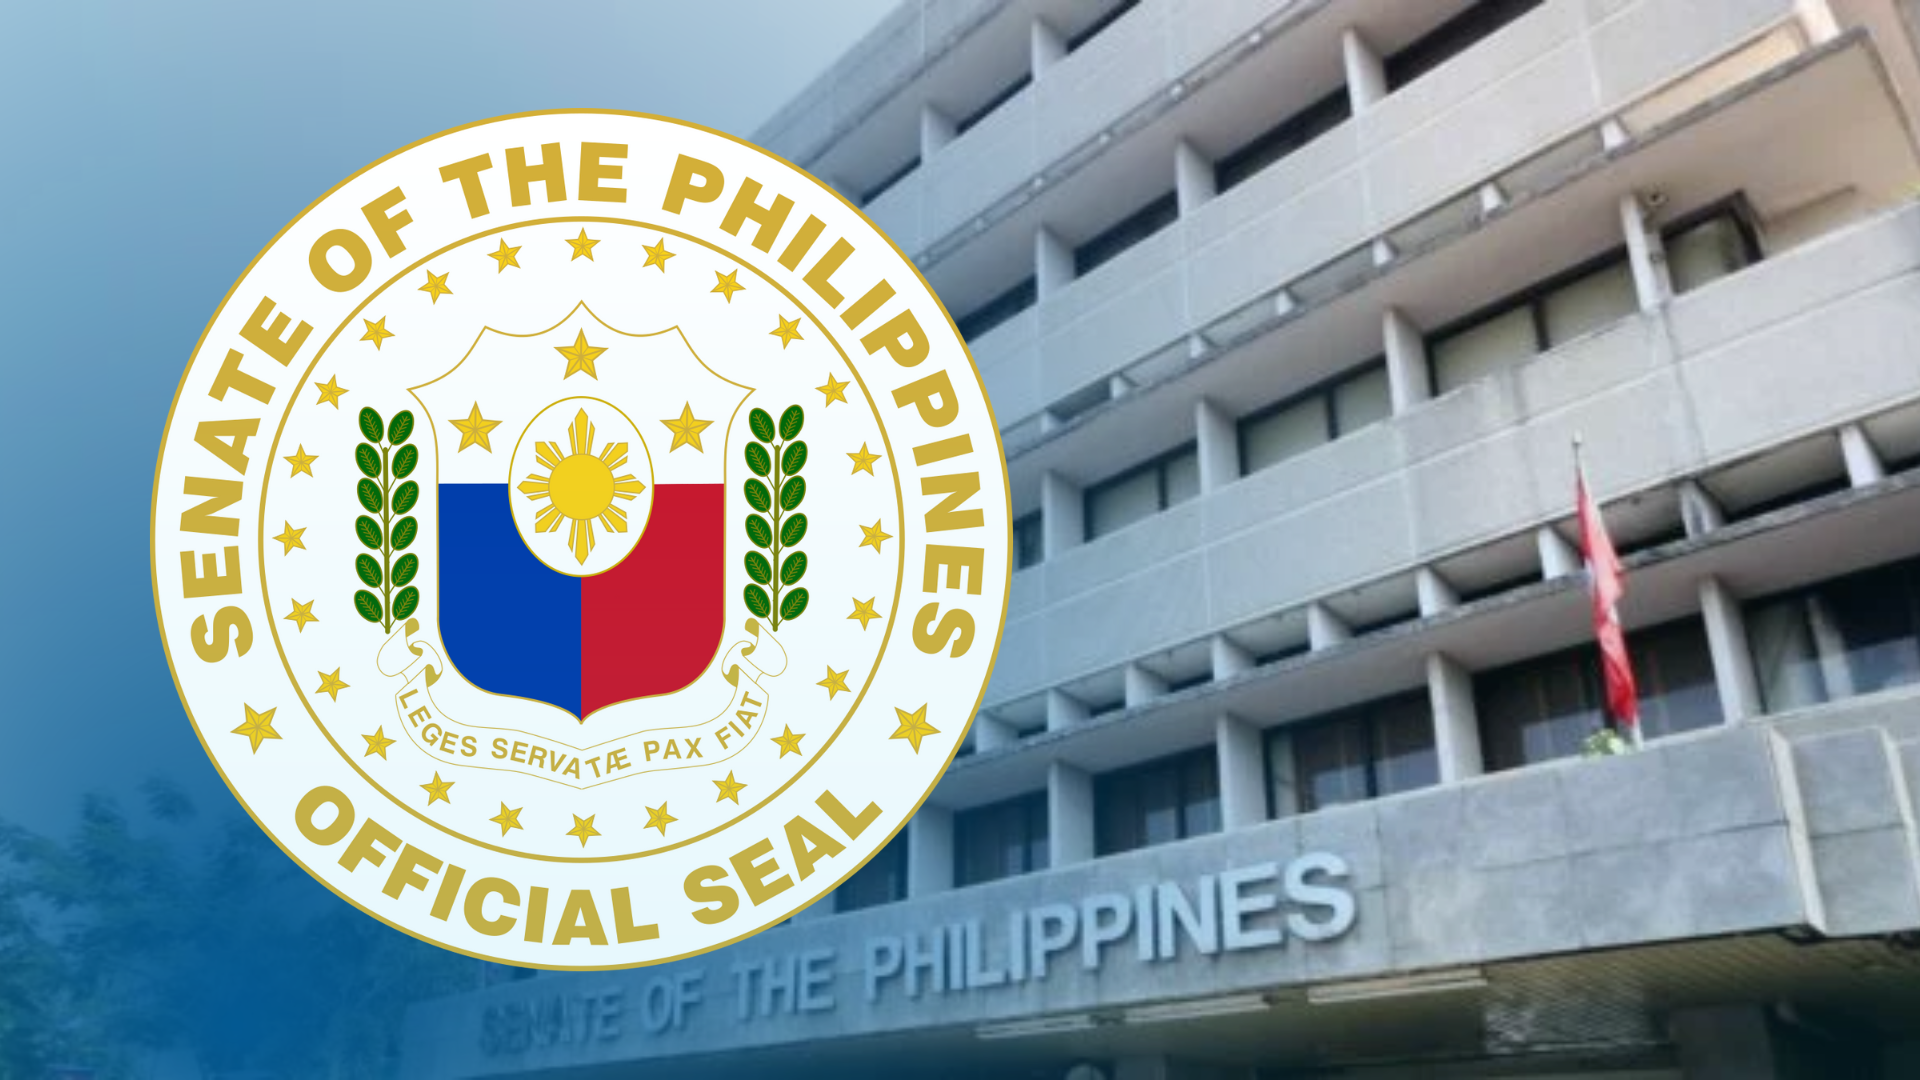 PHOTO: Composite image of Senate logo and building facade